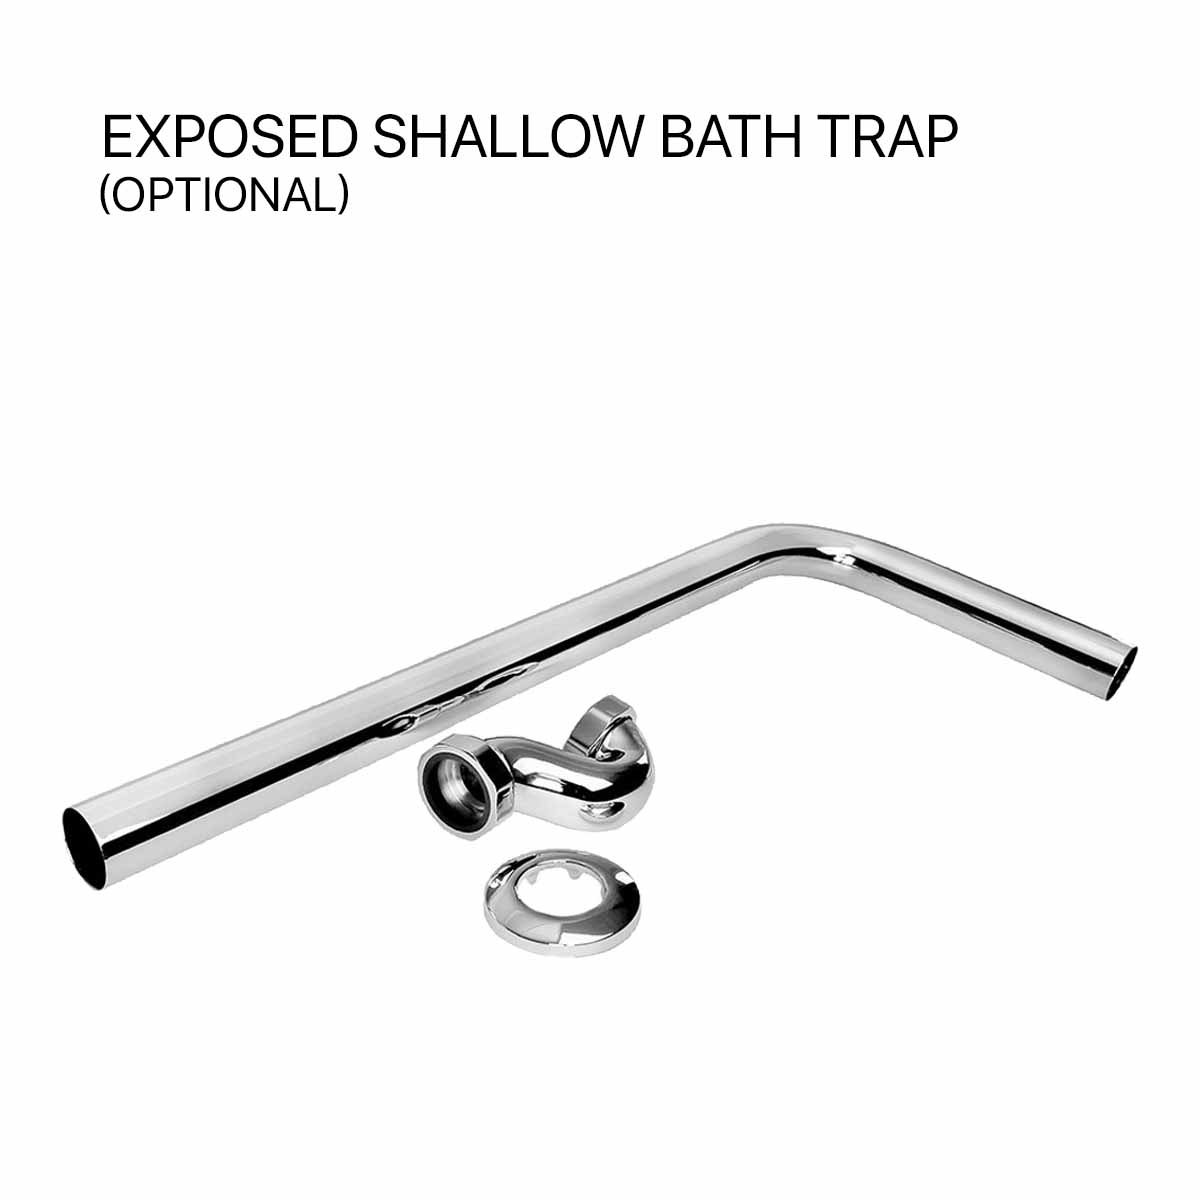 Heritage Buckingham Cast Iron Bath Exposed Shallow Bath Trap